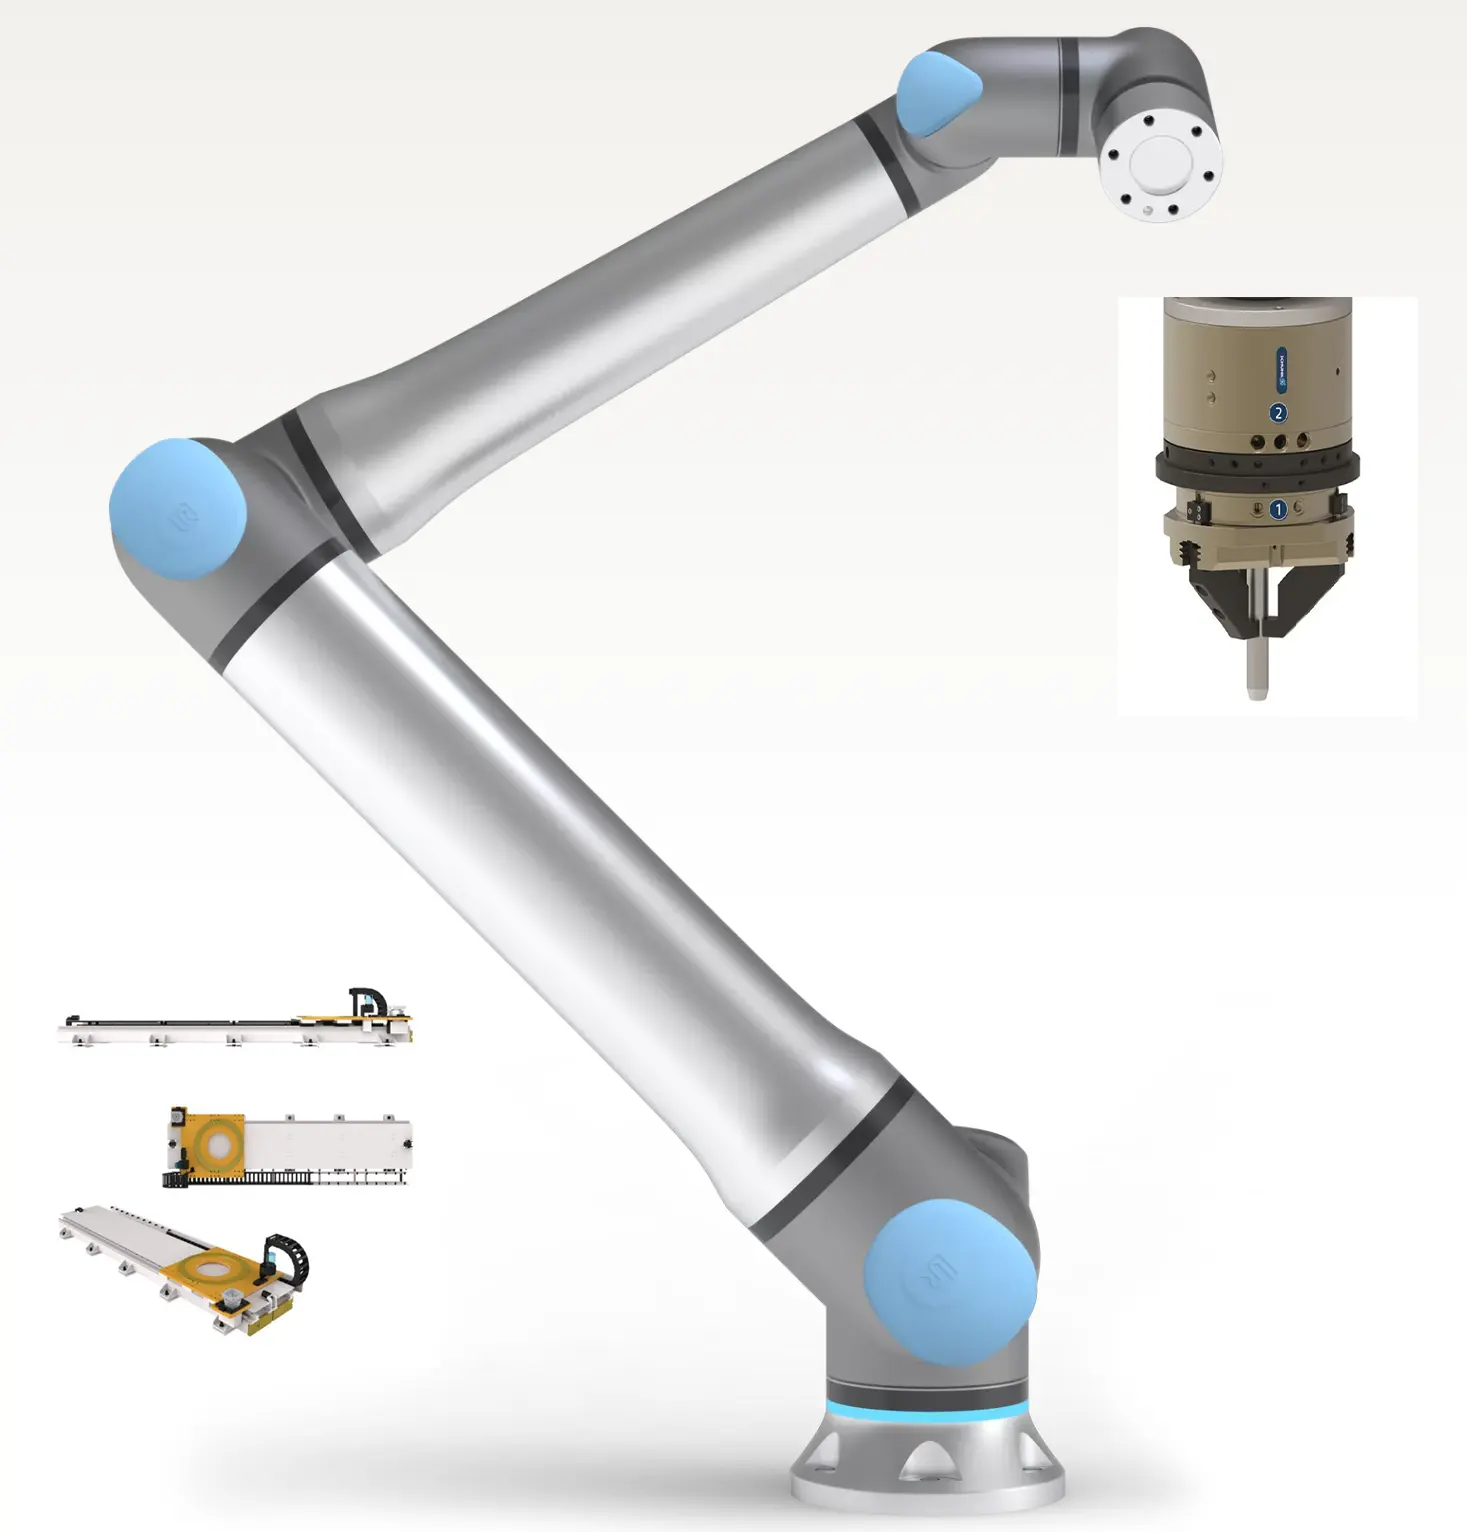 UR 20 Cobot Robot con SCHUNK Piezas de Pinza, Accesorio Extremo Efector para Agarre en Planta de Almacén